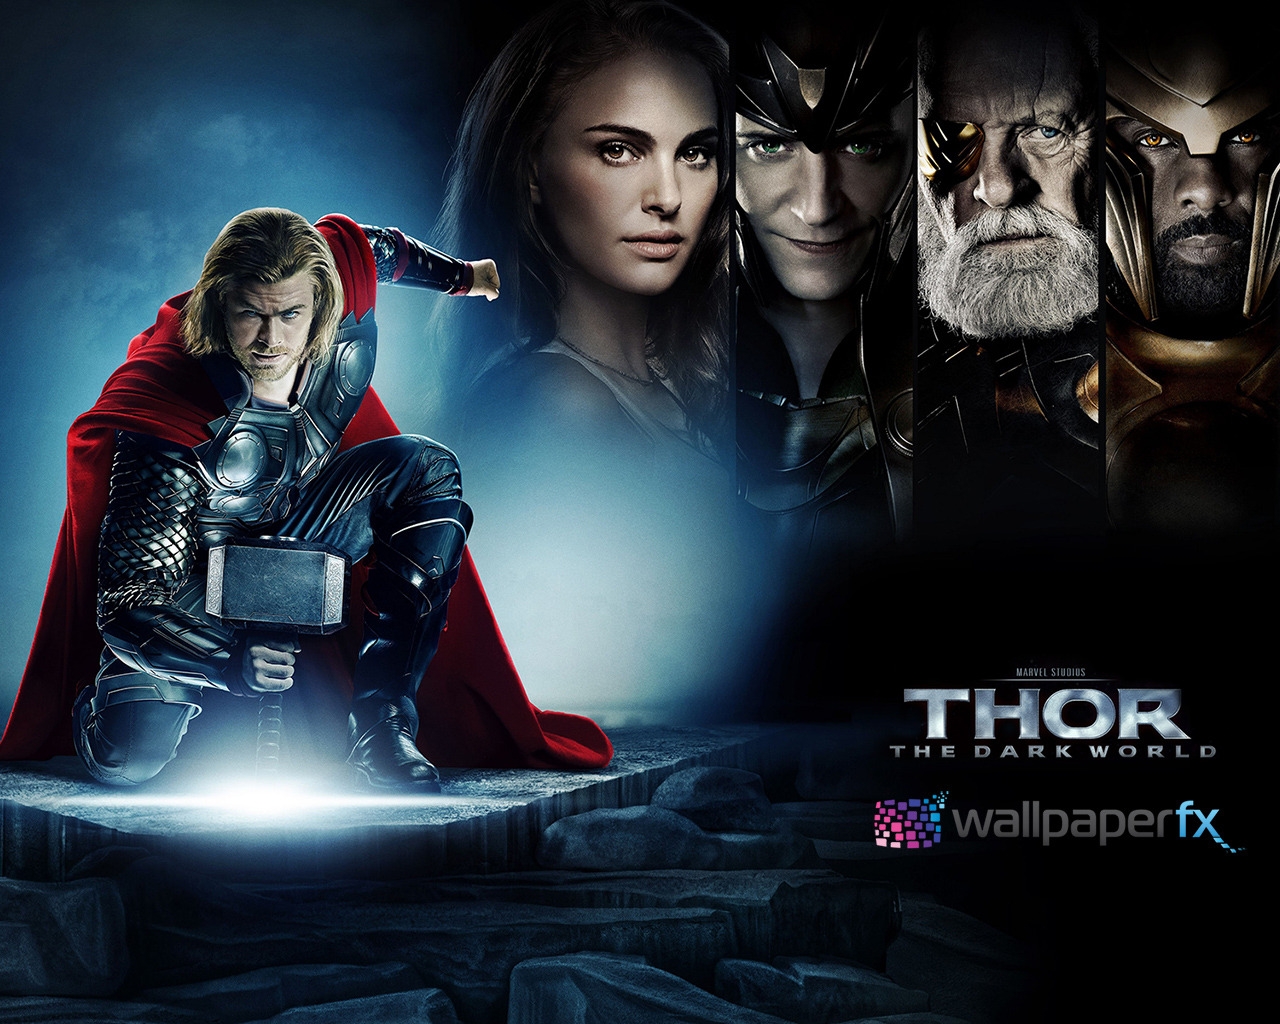 Thor The Dark World for 1280 x 1024 resolution